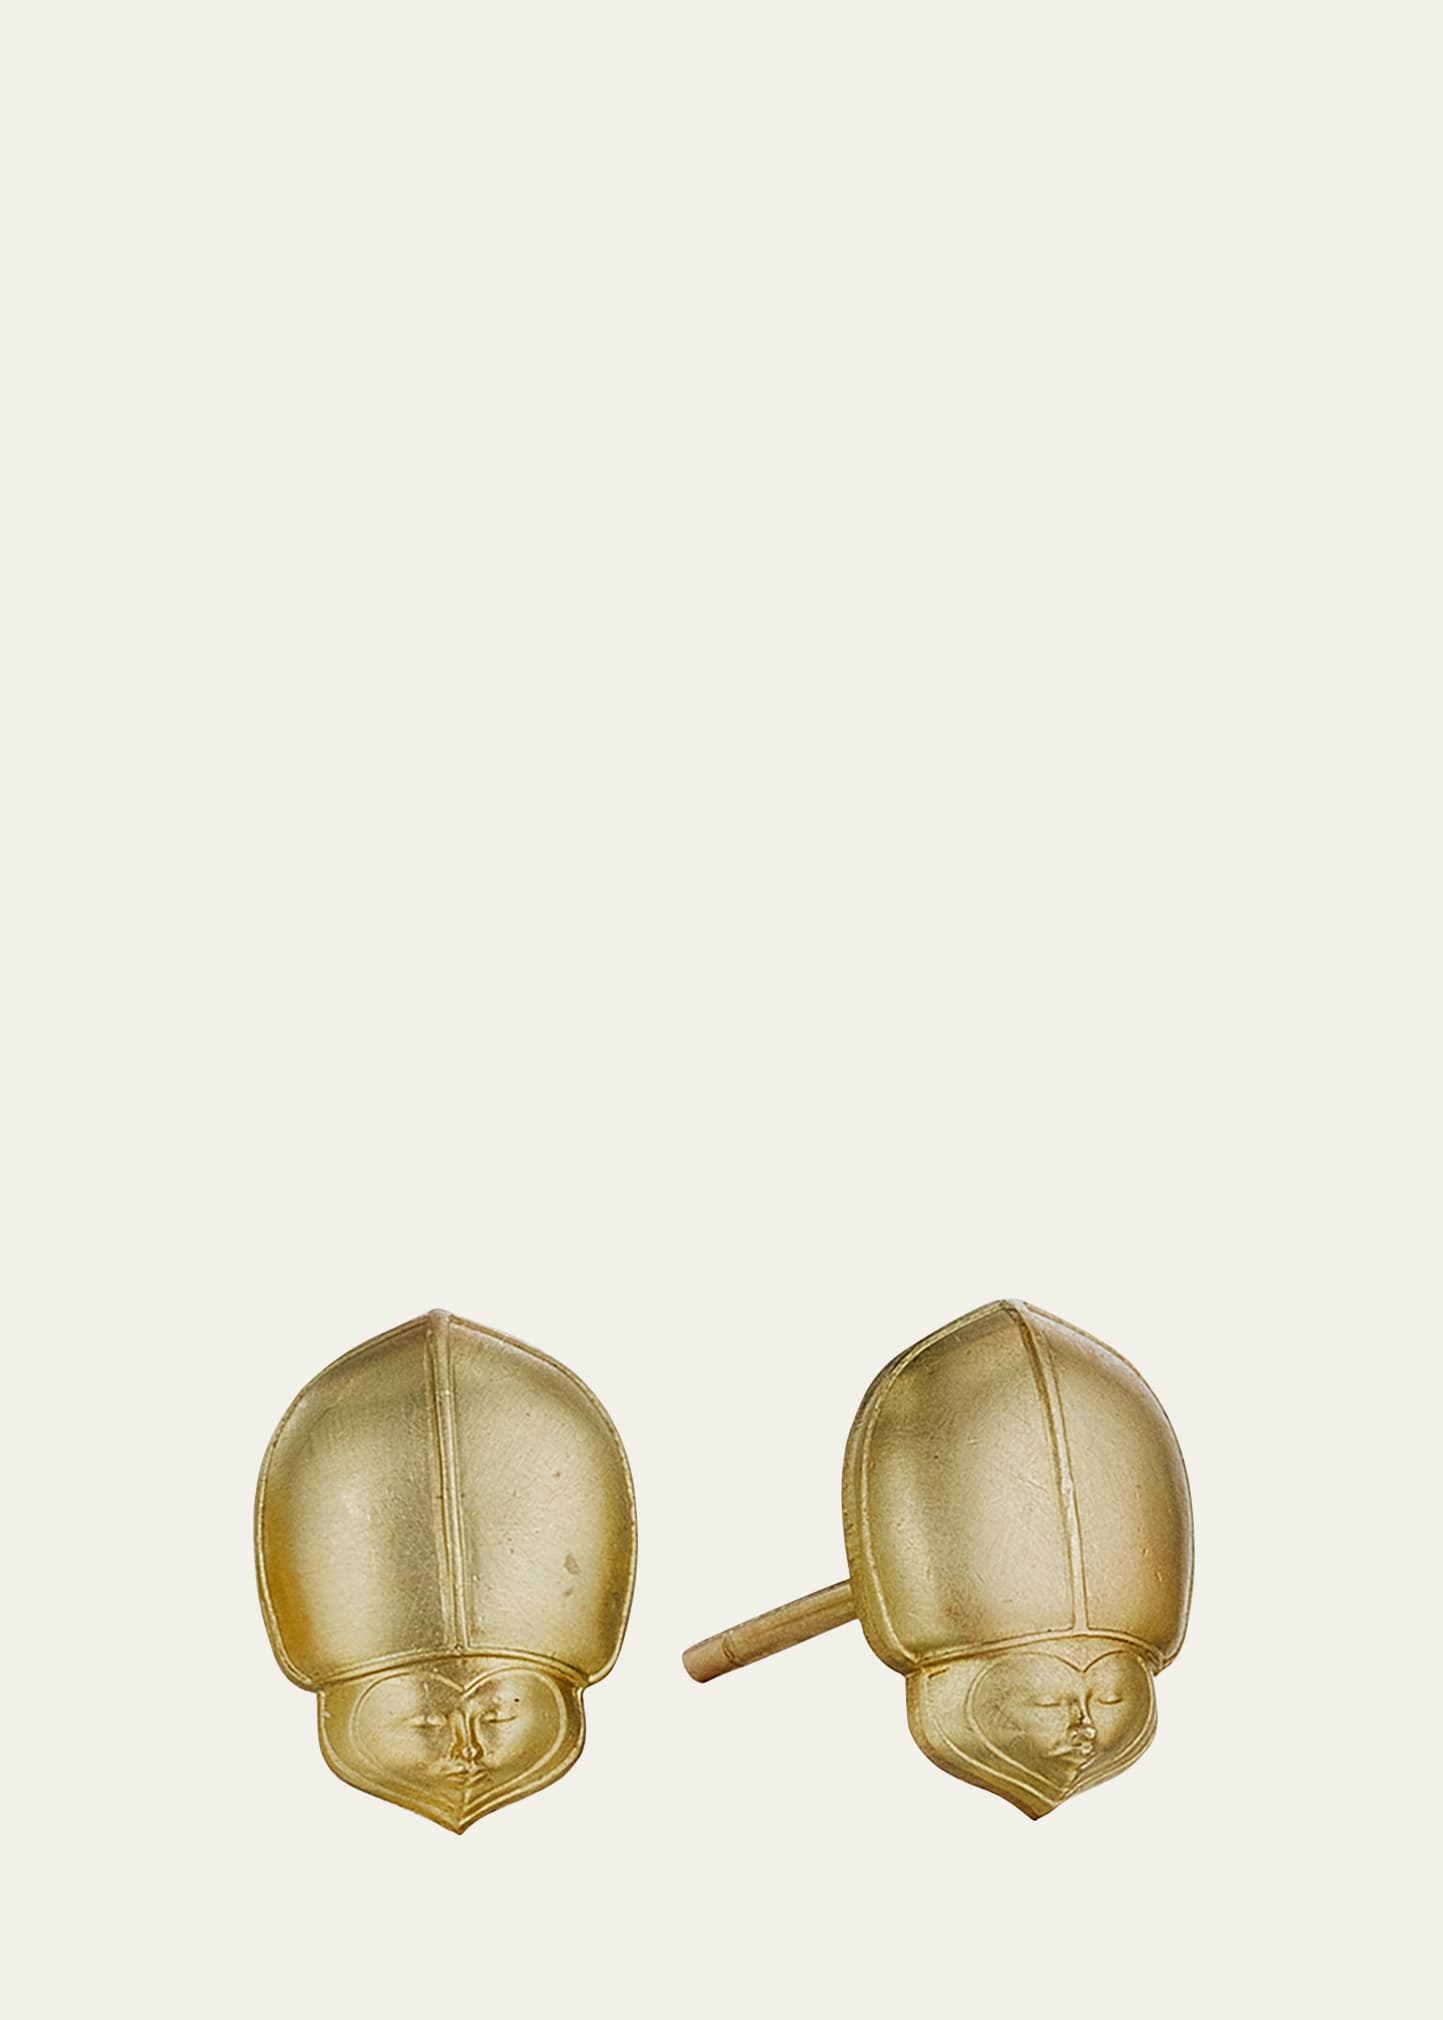 Anthony Lent Ladybug Stud Earrings in 18k Yellow Gold